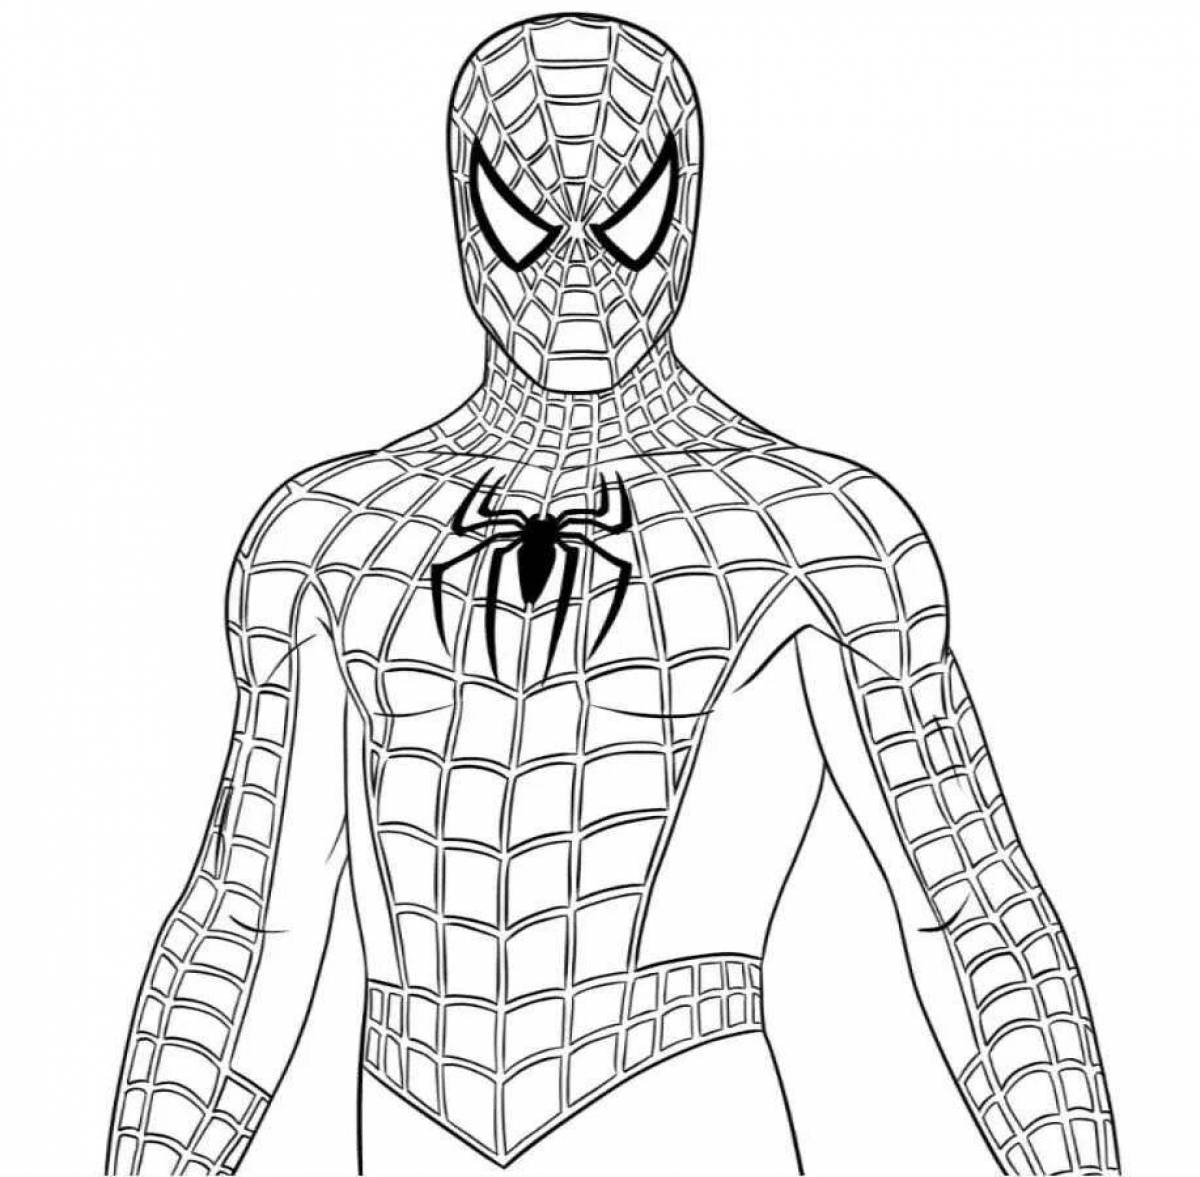 Coloring page adorable spiderman